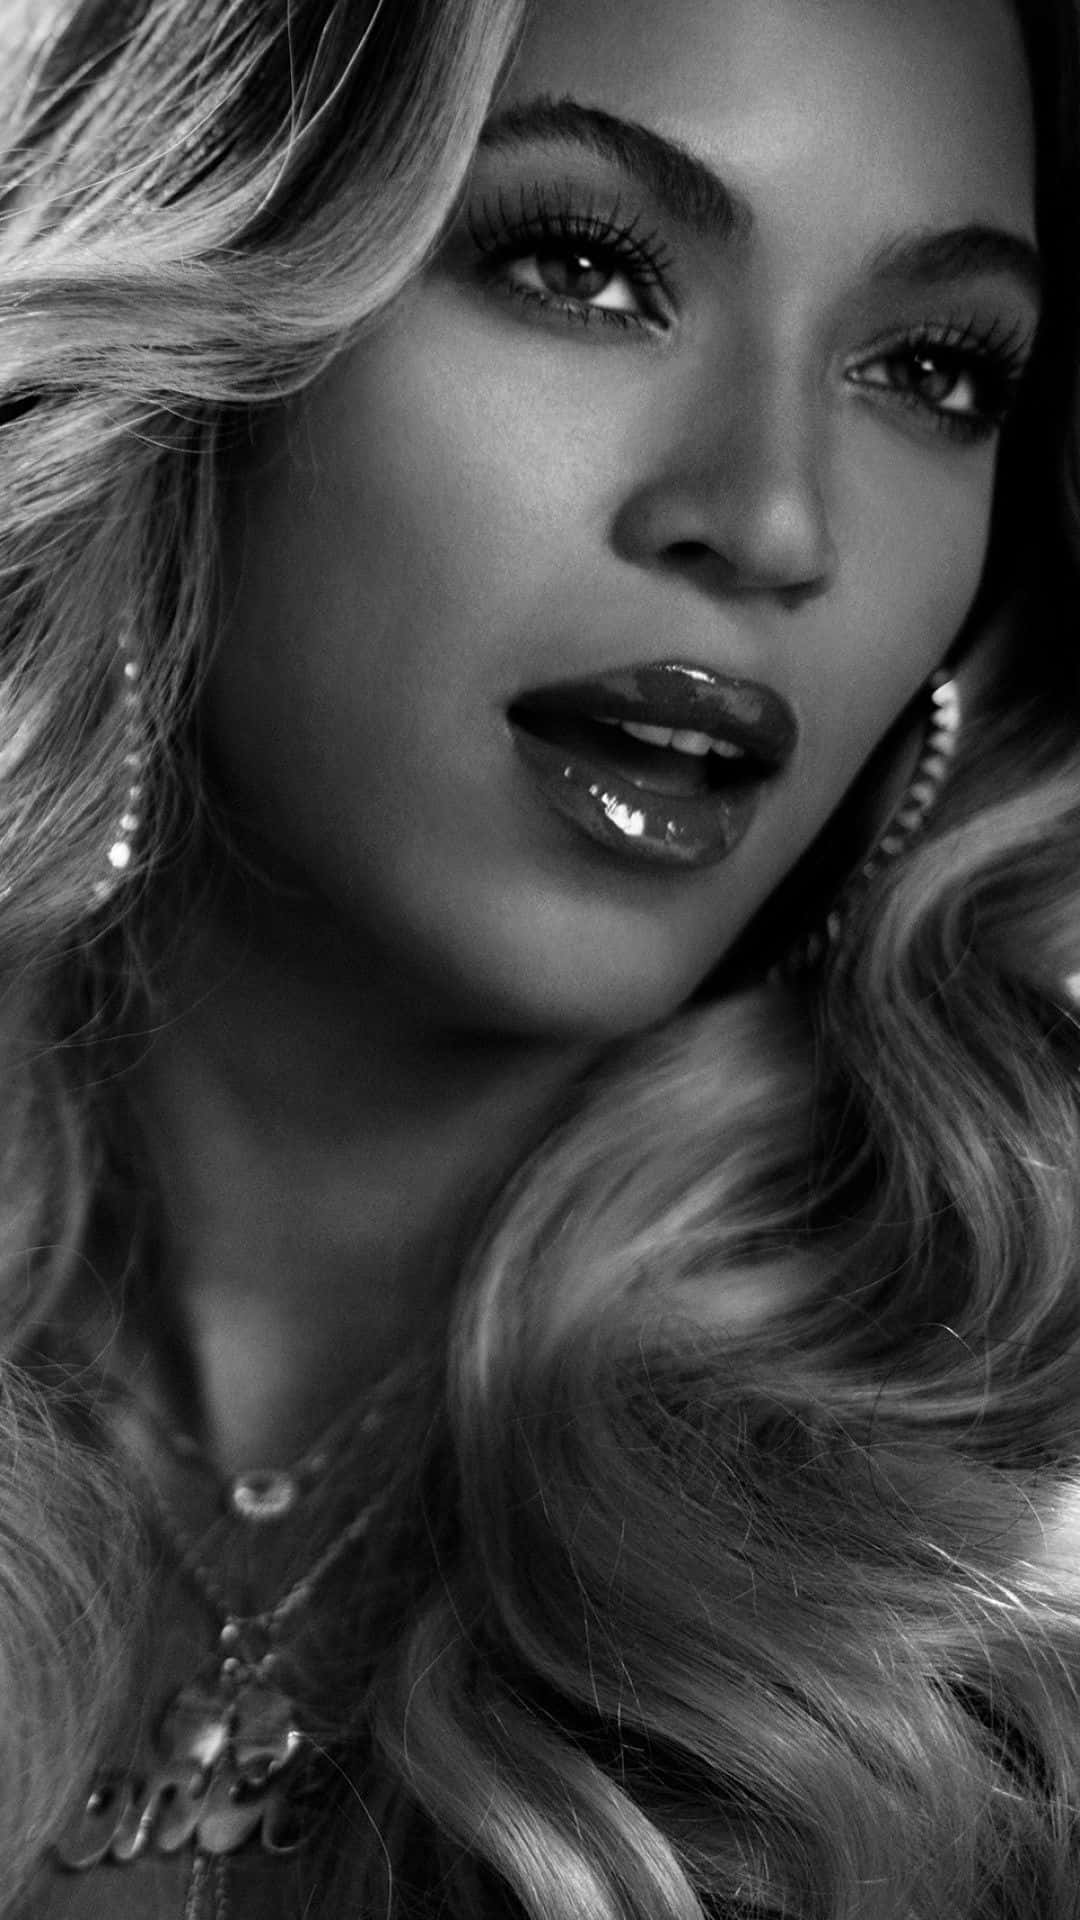 Singer and artist Beyoncé